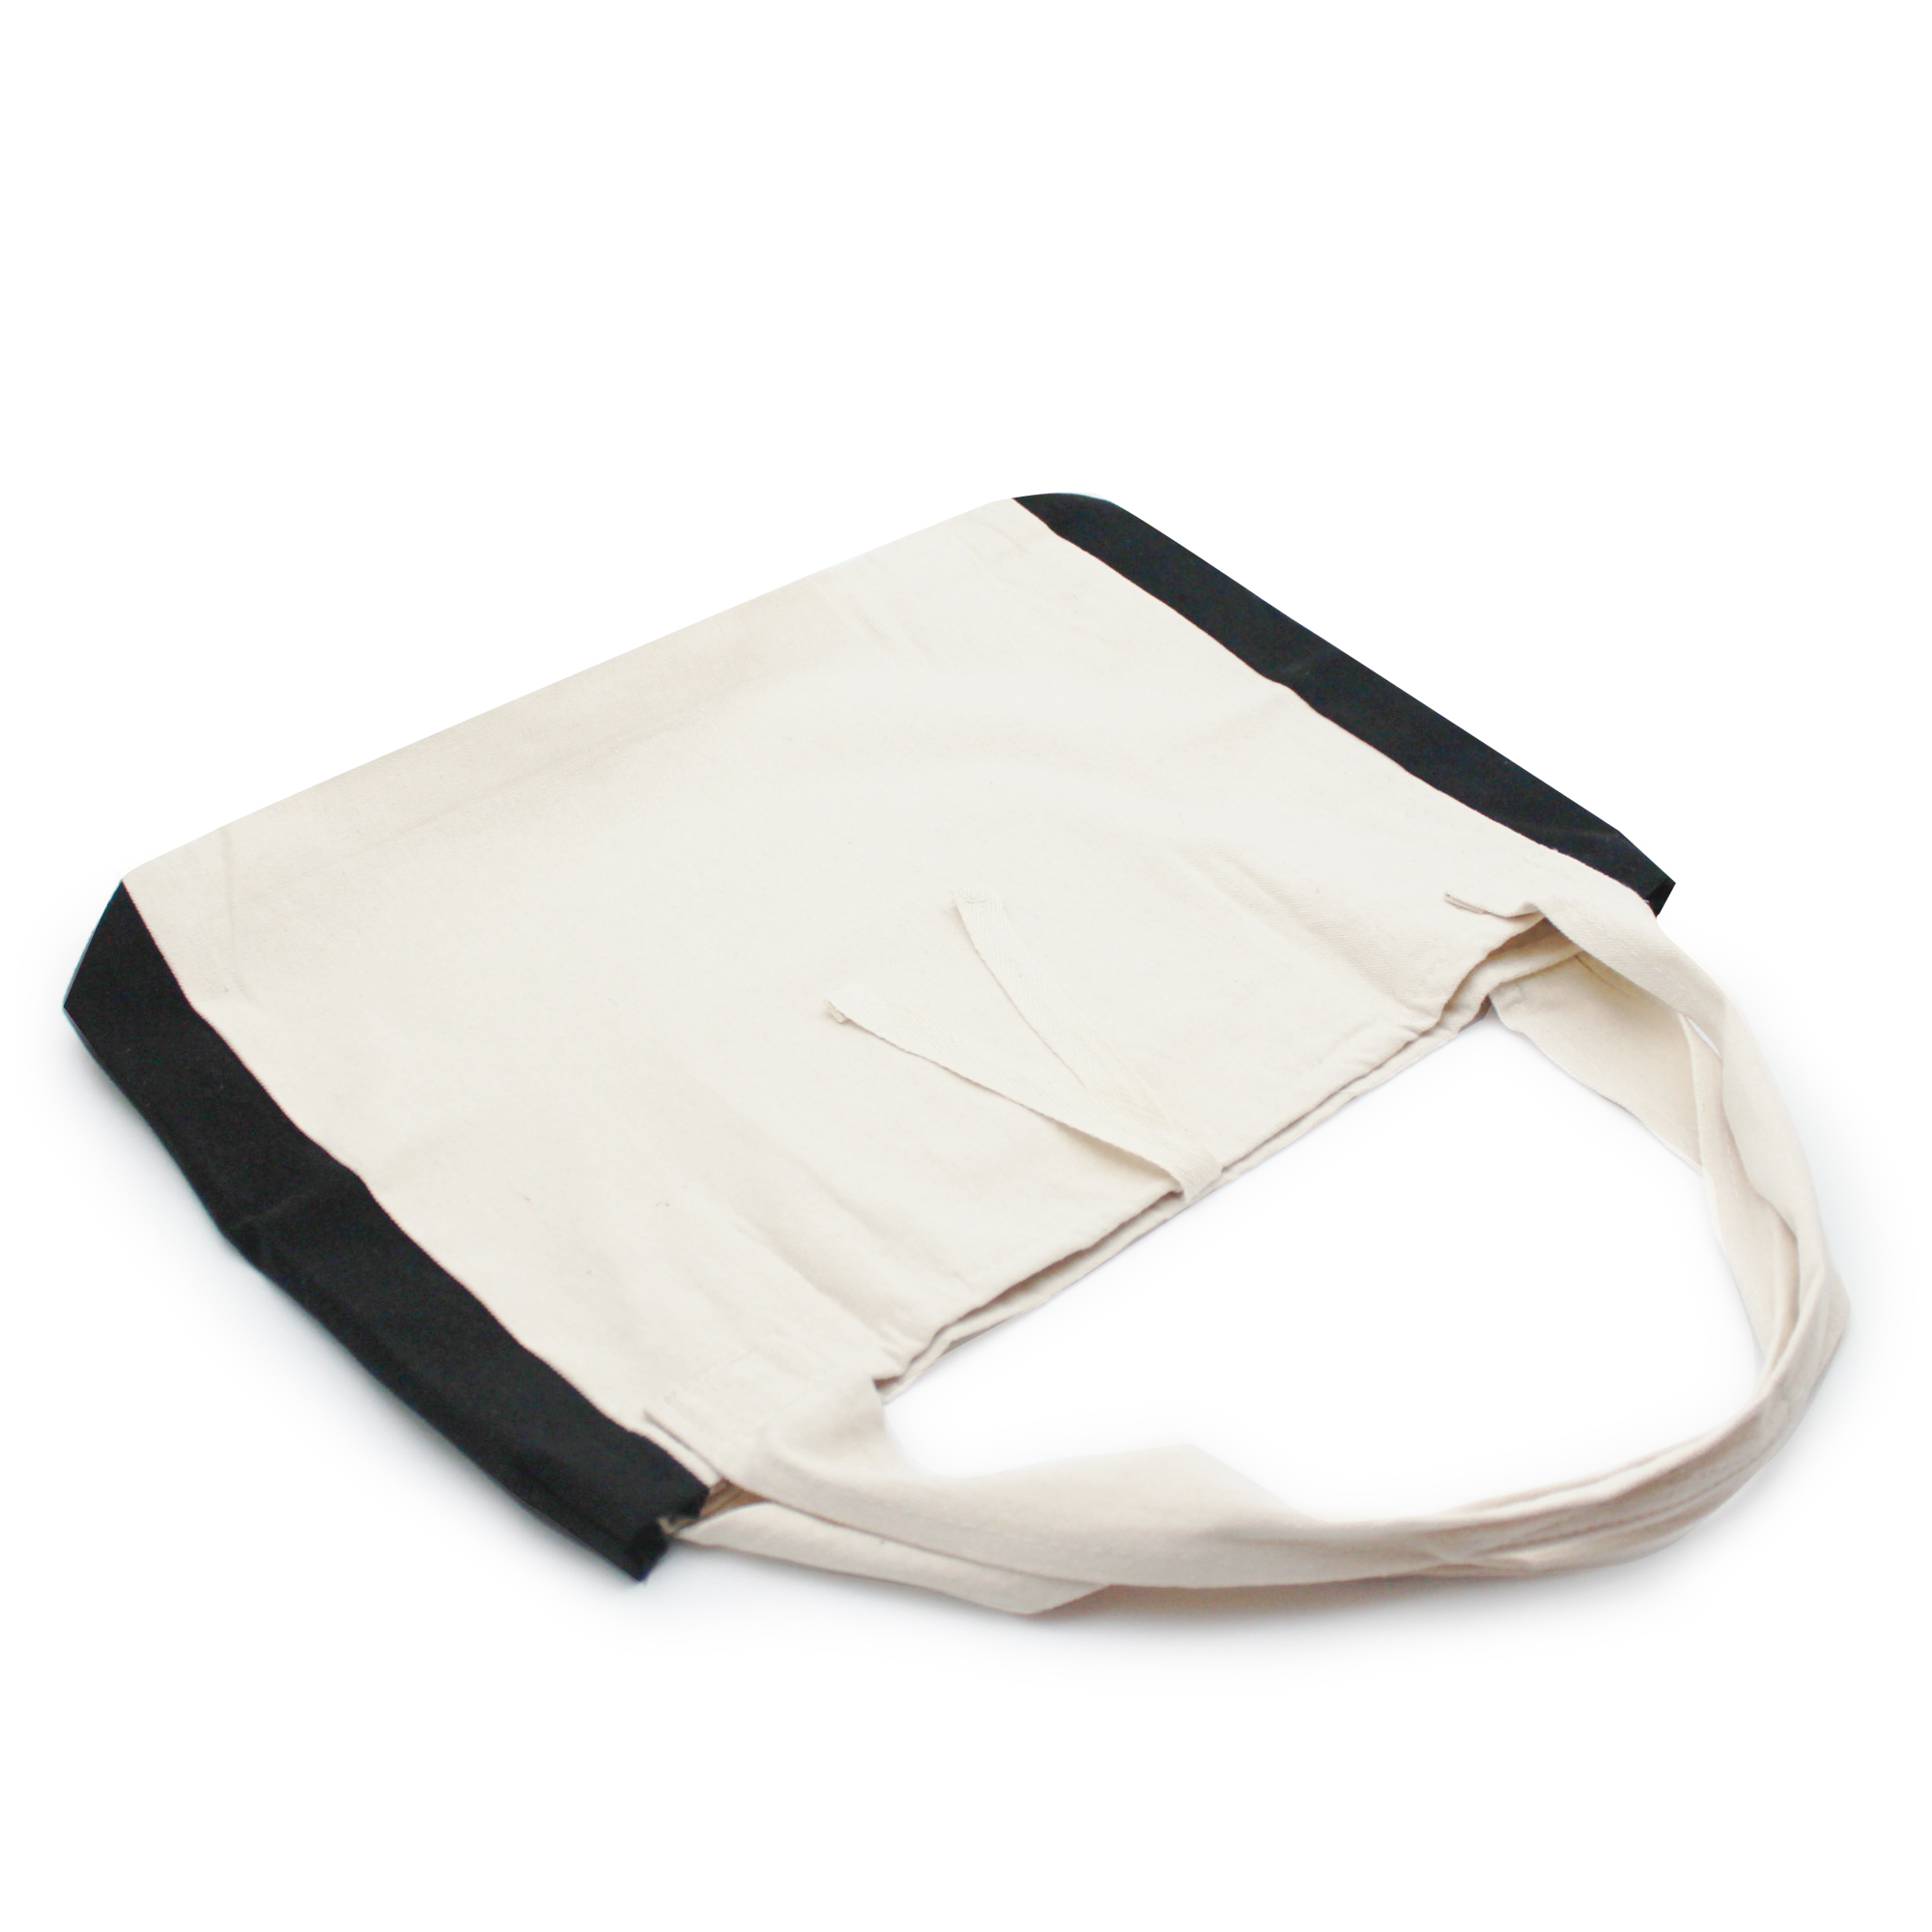 EcoJeannie (2 Bags) 100% Cotton Canvas Reusable Tote Bag w/Inner Pocket, Gusset and Closure Strips, Multi Use bag, Shoulder Bag, Travel Tote, Picnic Bag, 24-7 Bag, School Bag - image 2 of 4